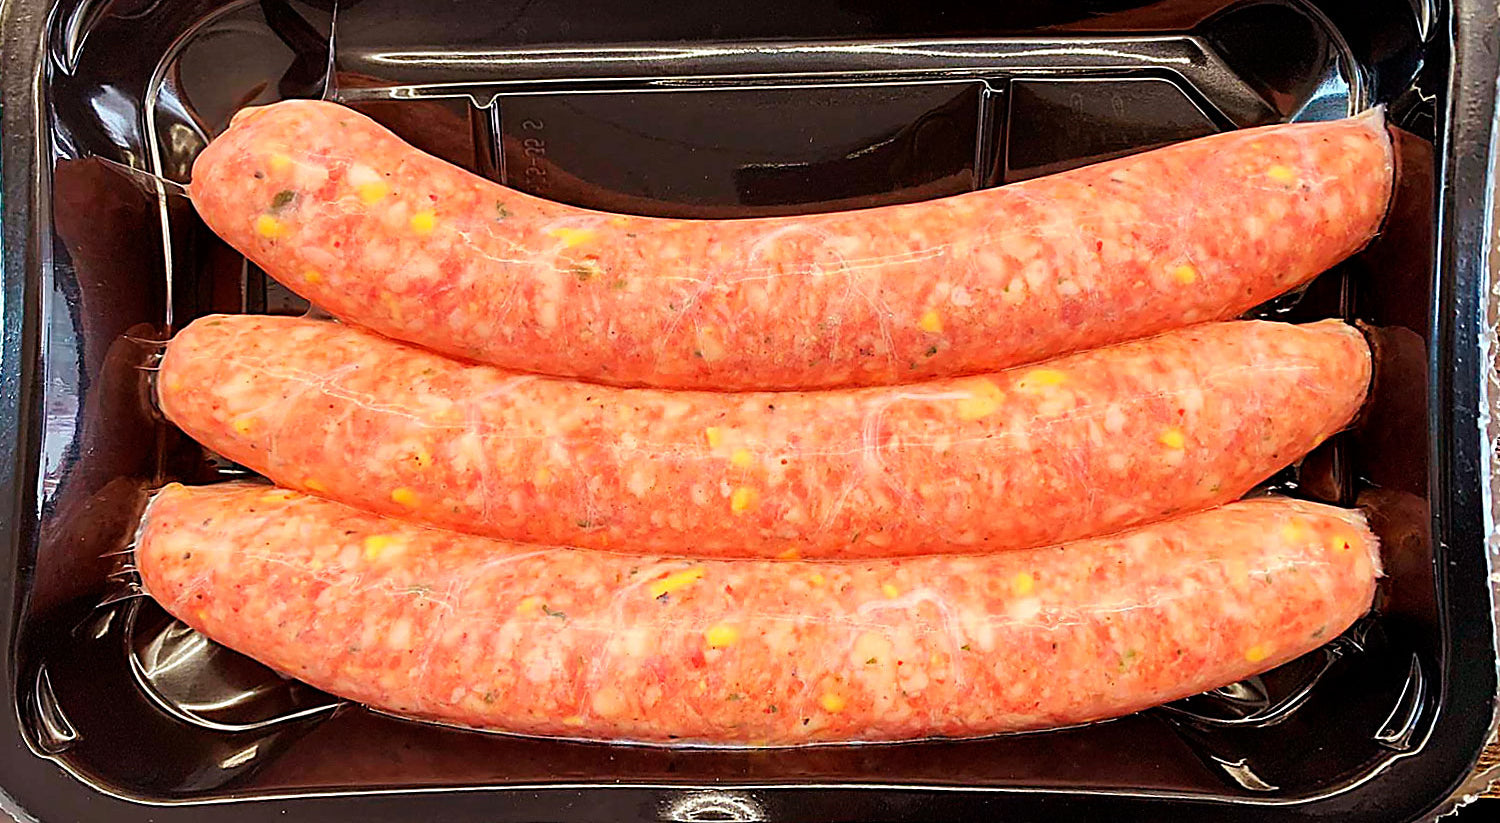 Pork Sausage Cheddar Jalapeno skin packed